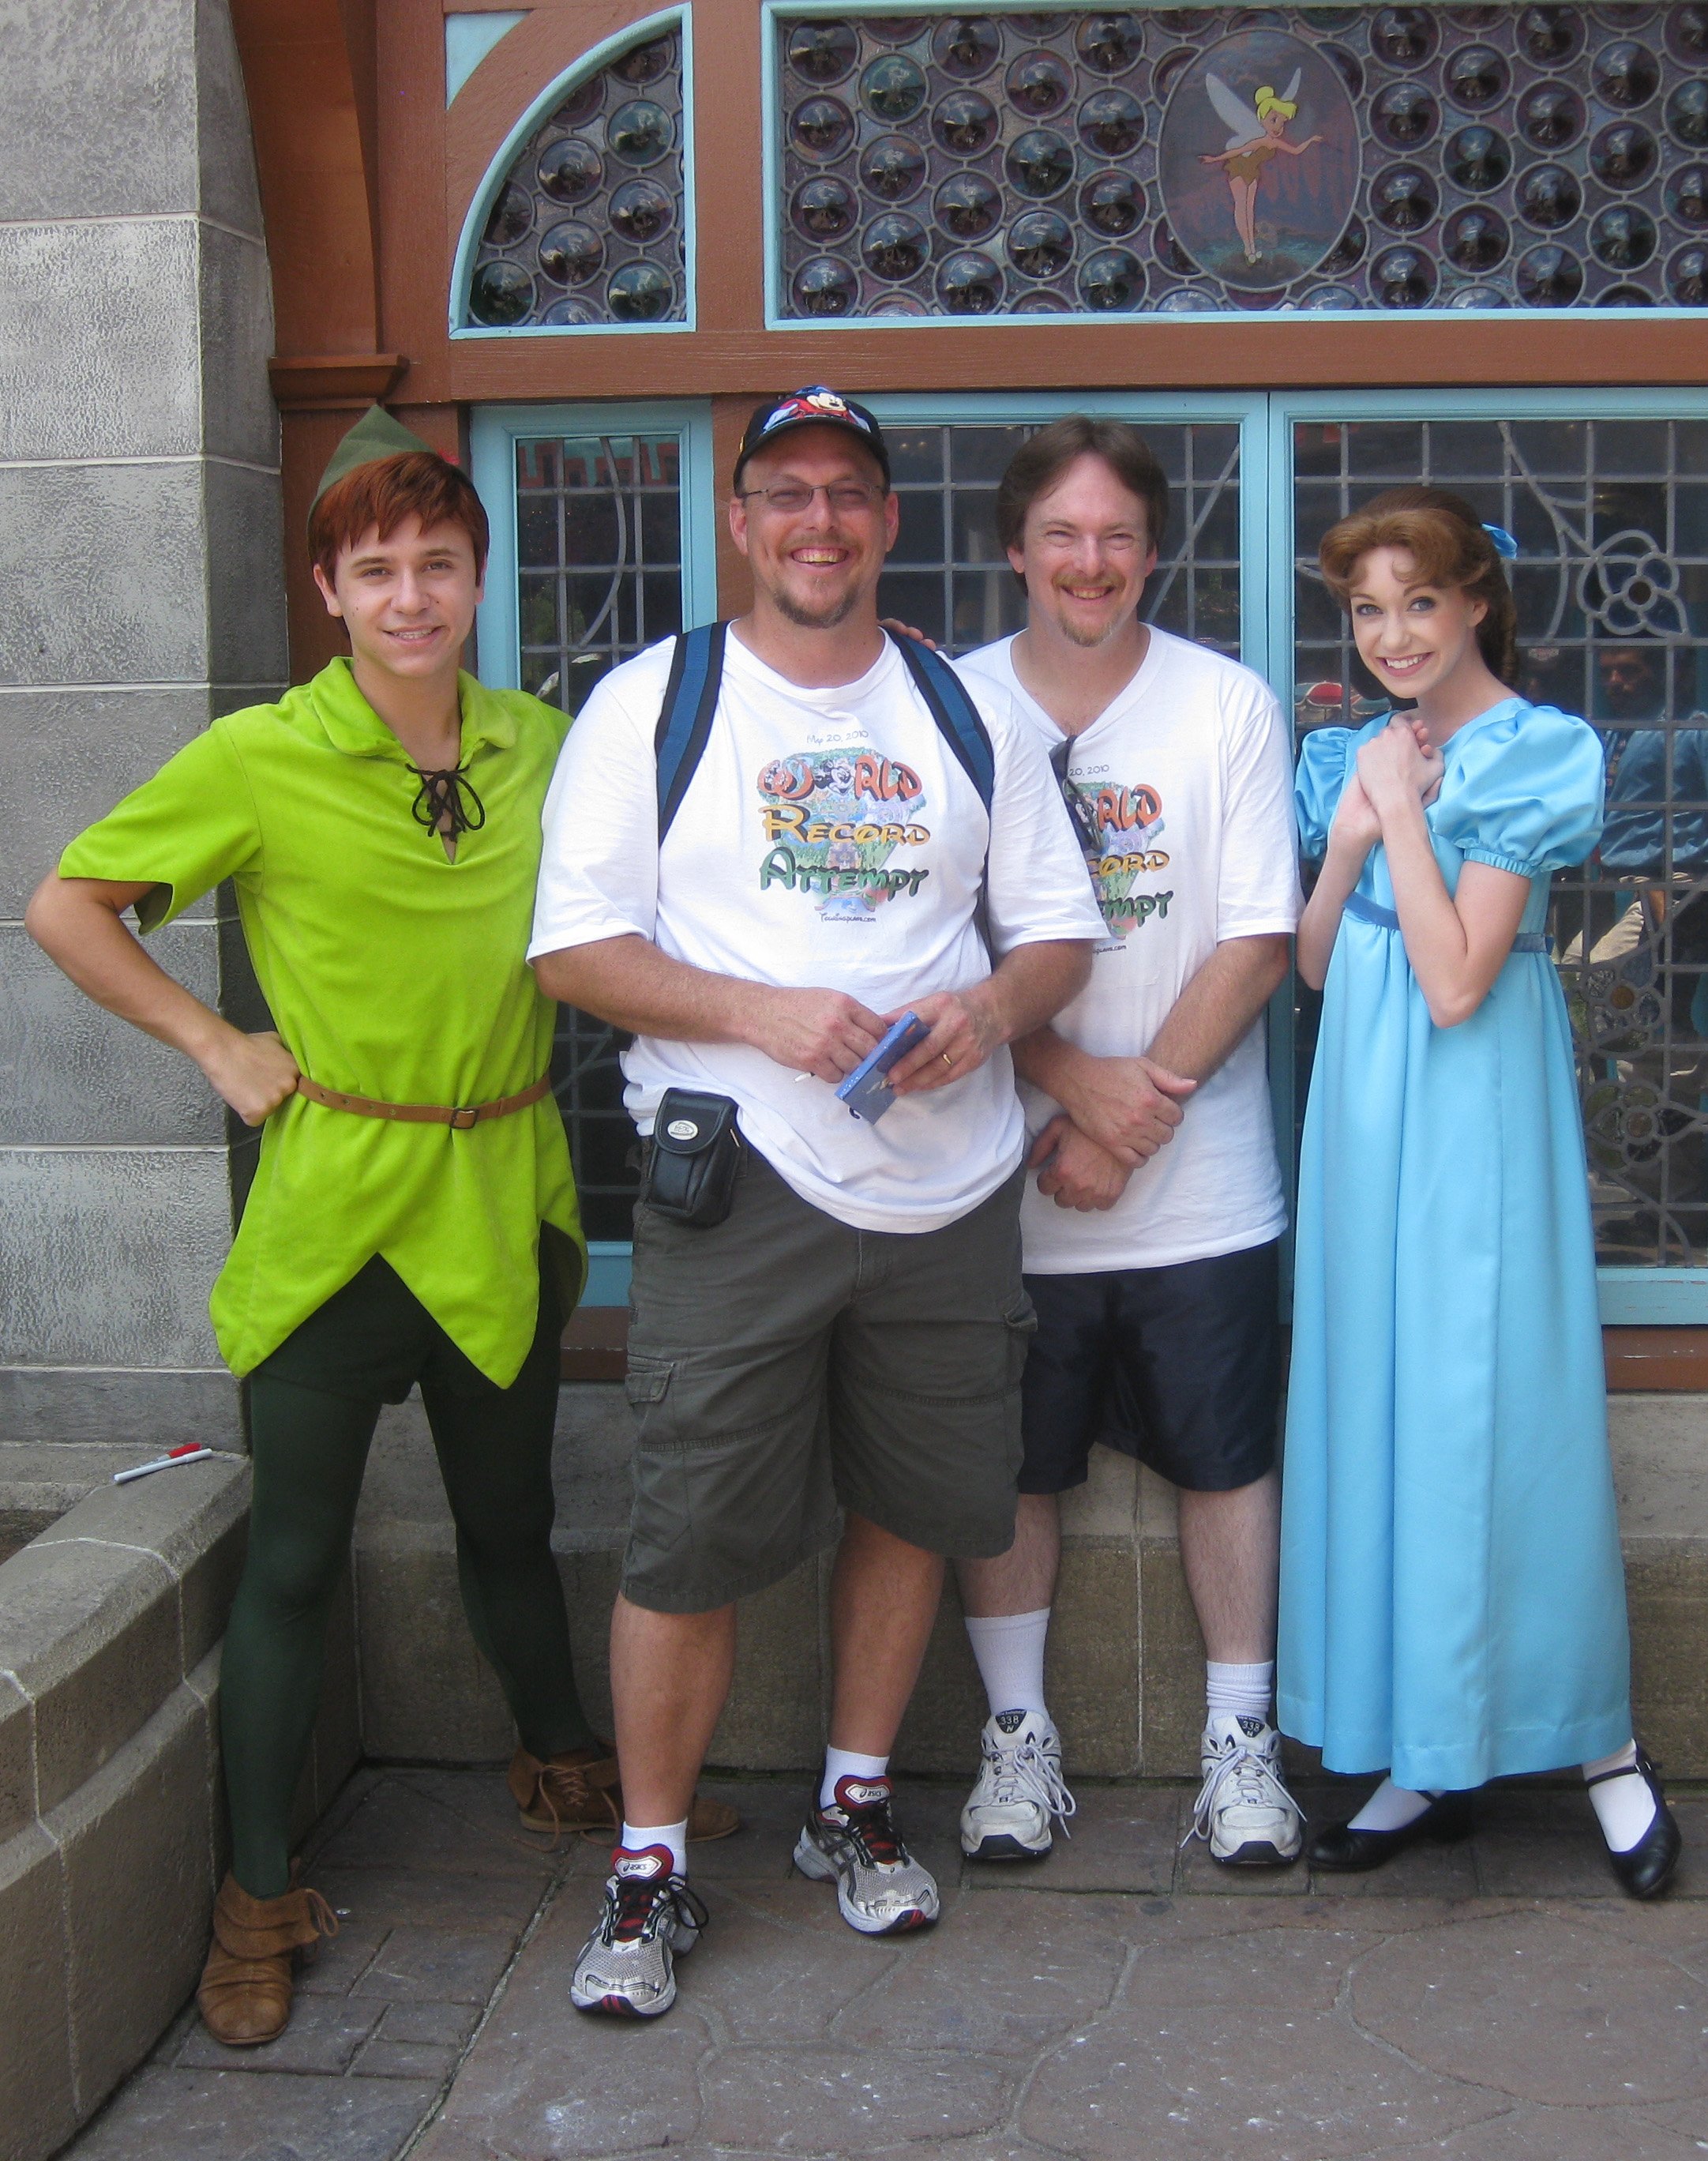 Peter Pan and Wendy - Fantasyland 2010